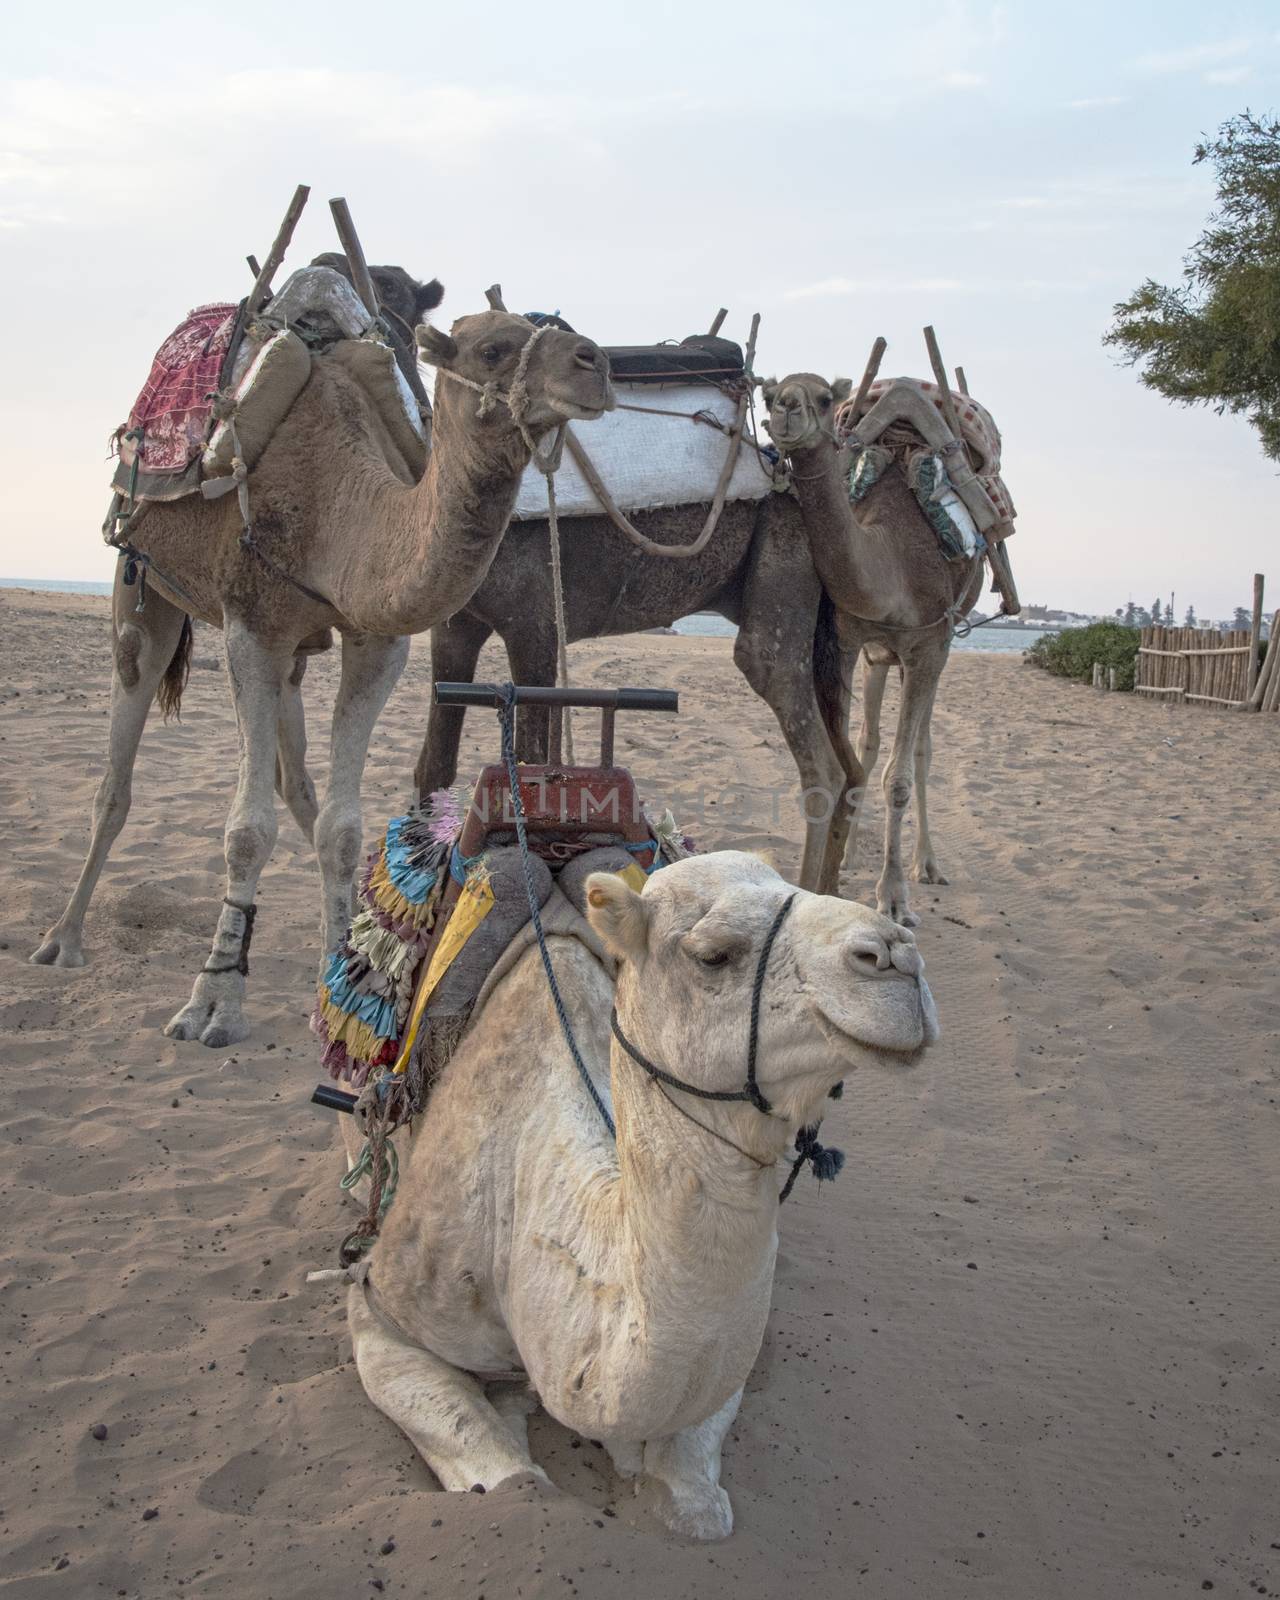 Essaouria, Morocco - September 2017: Camel train taking a break at the beach
